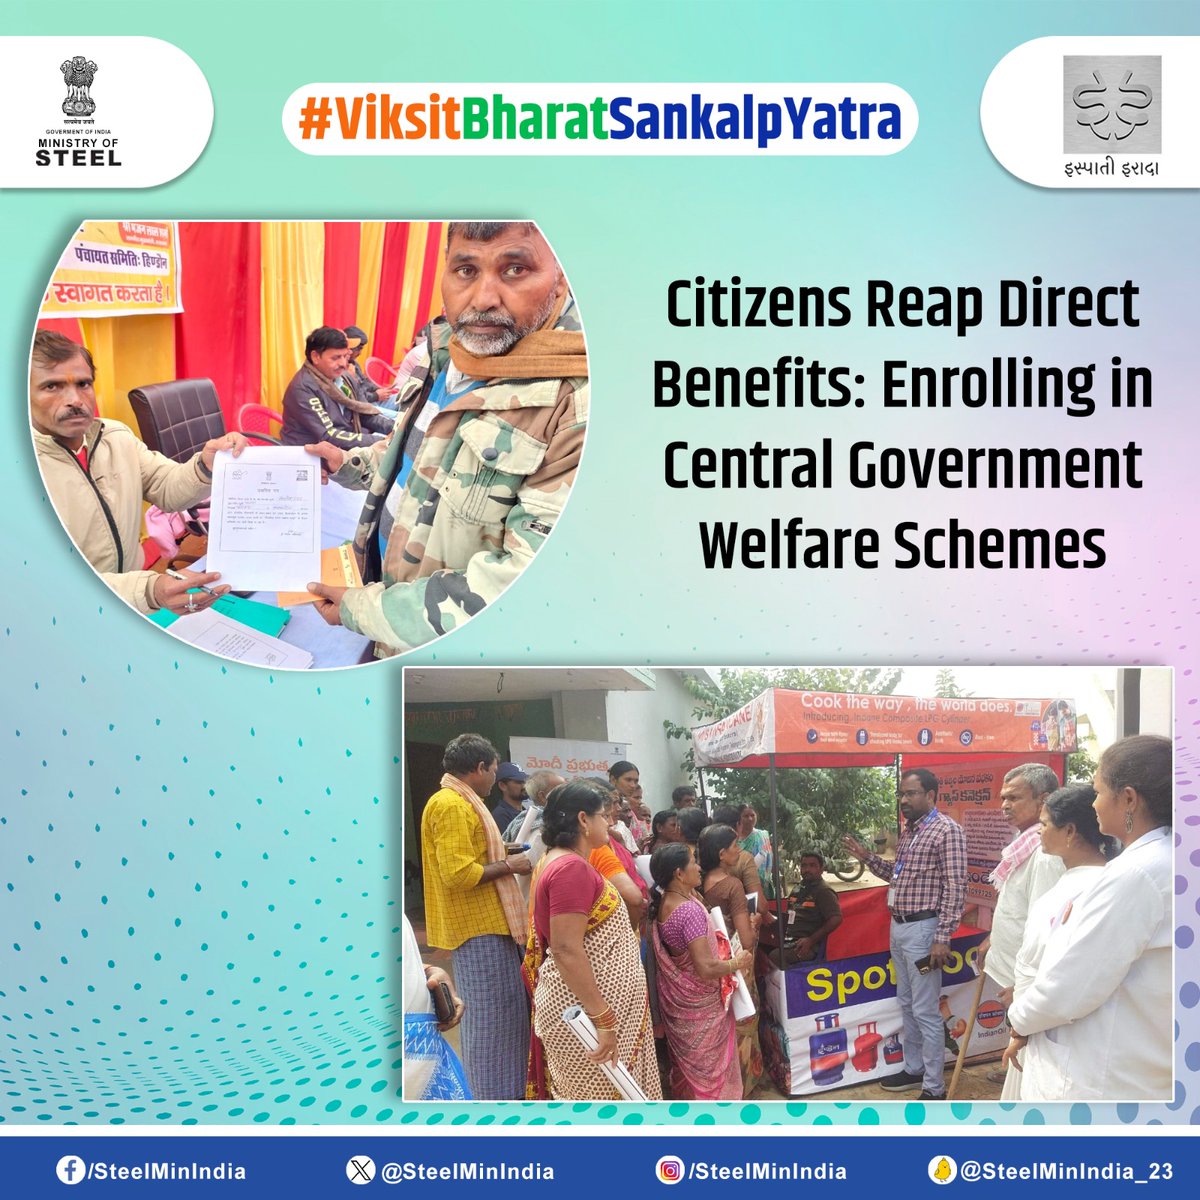 Empowered citizens directly access benefits through participation in Central government welfare schemes. 💪🏛️🌐

#HamaraSankalpViksitBharat #ViksitBharatSankalpYatra #CitizenEmpowerment 

@mygovindia